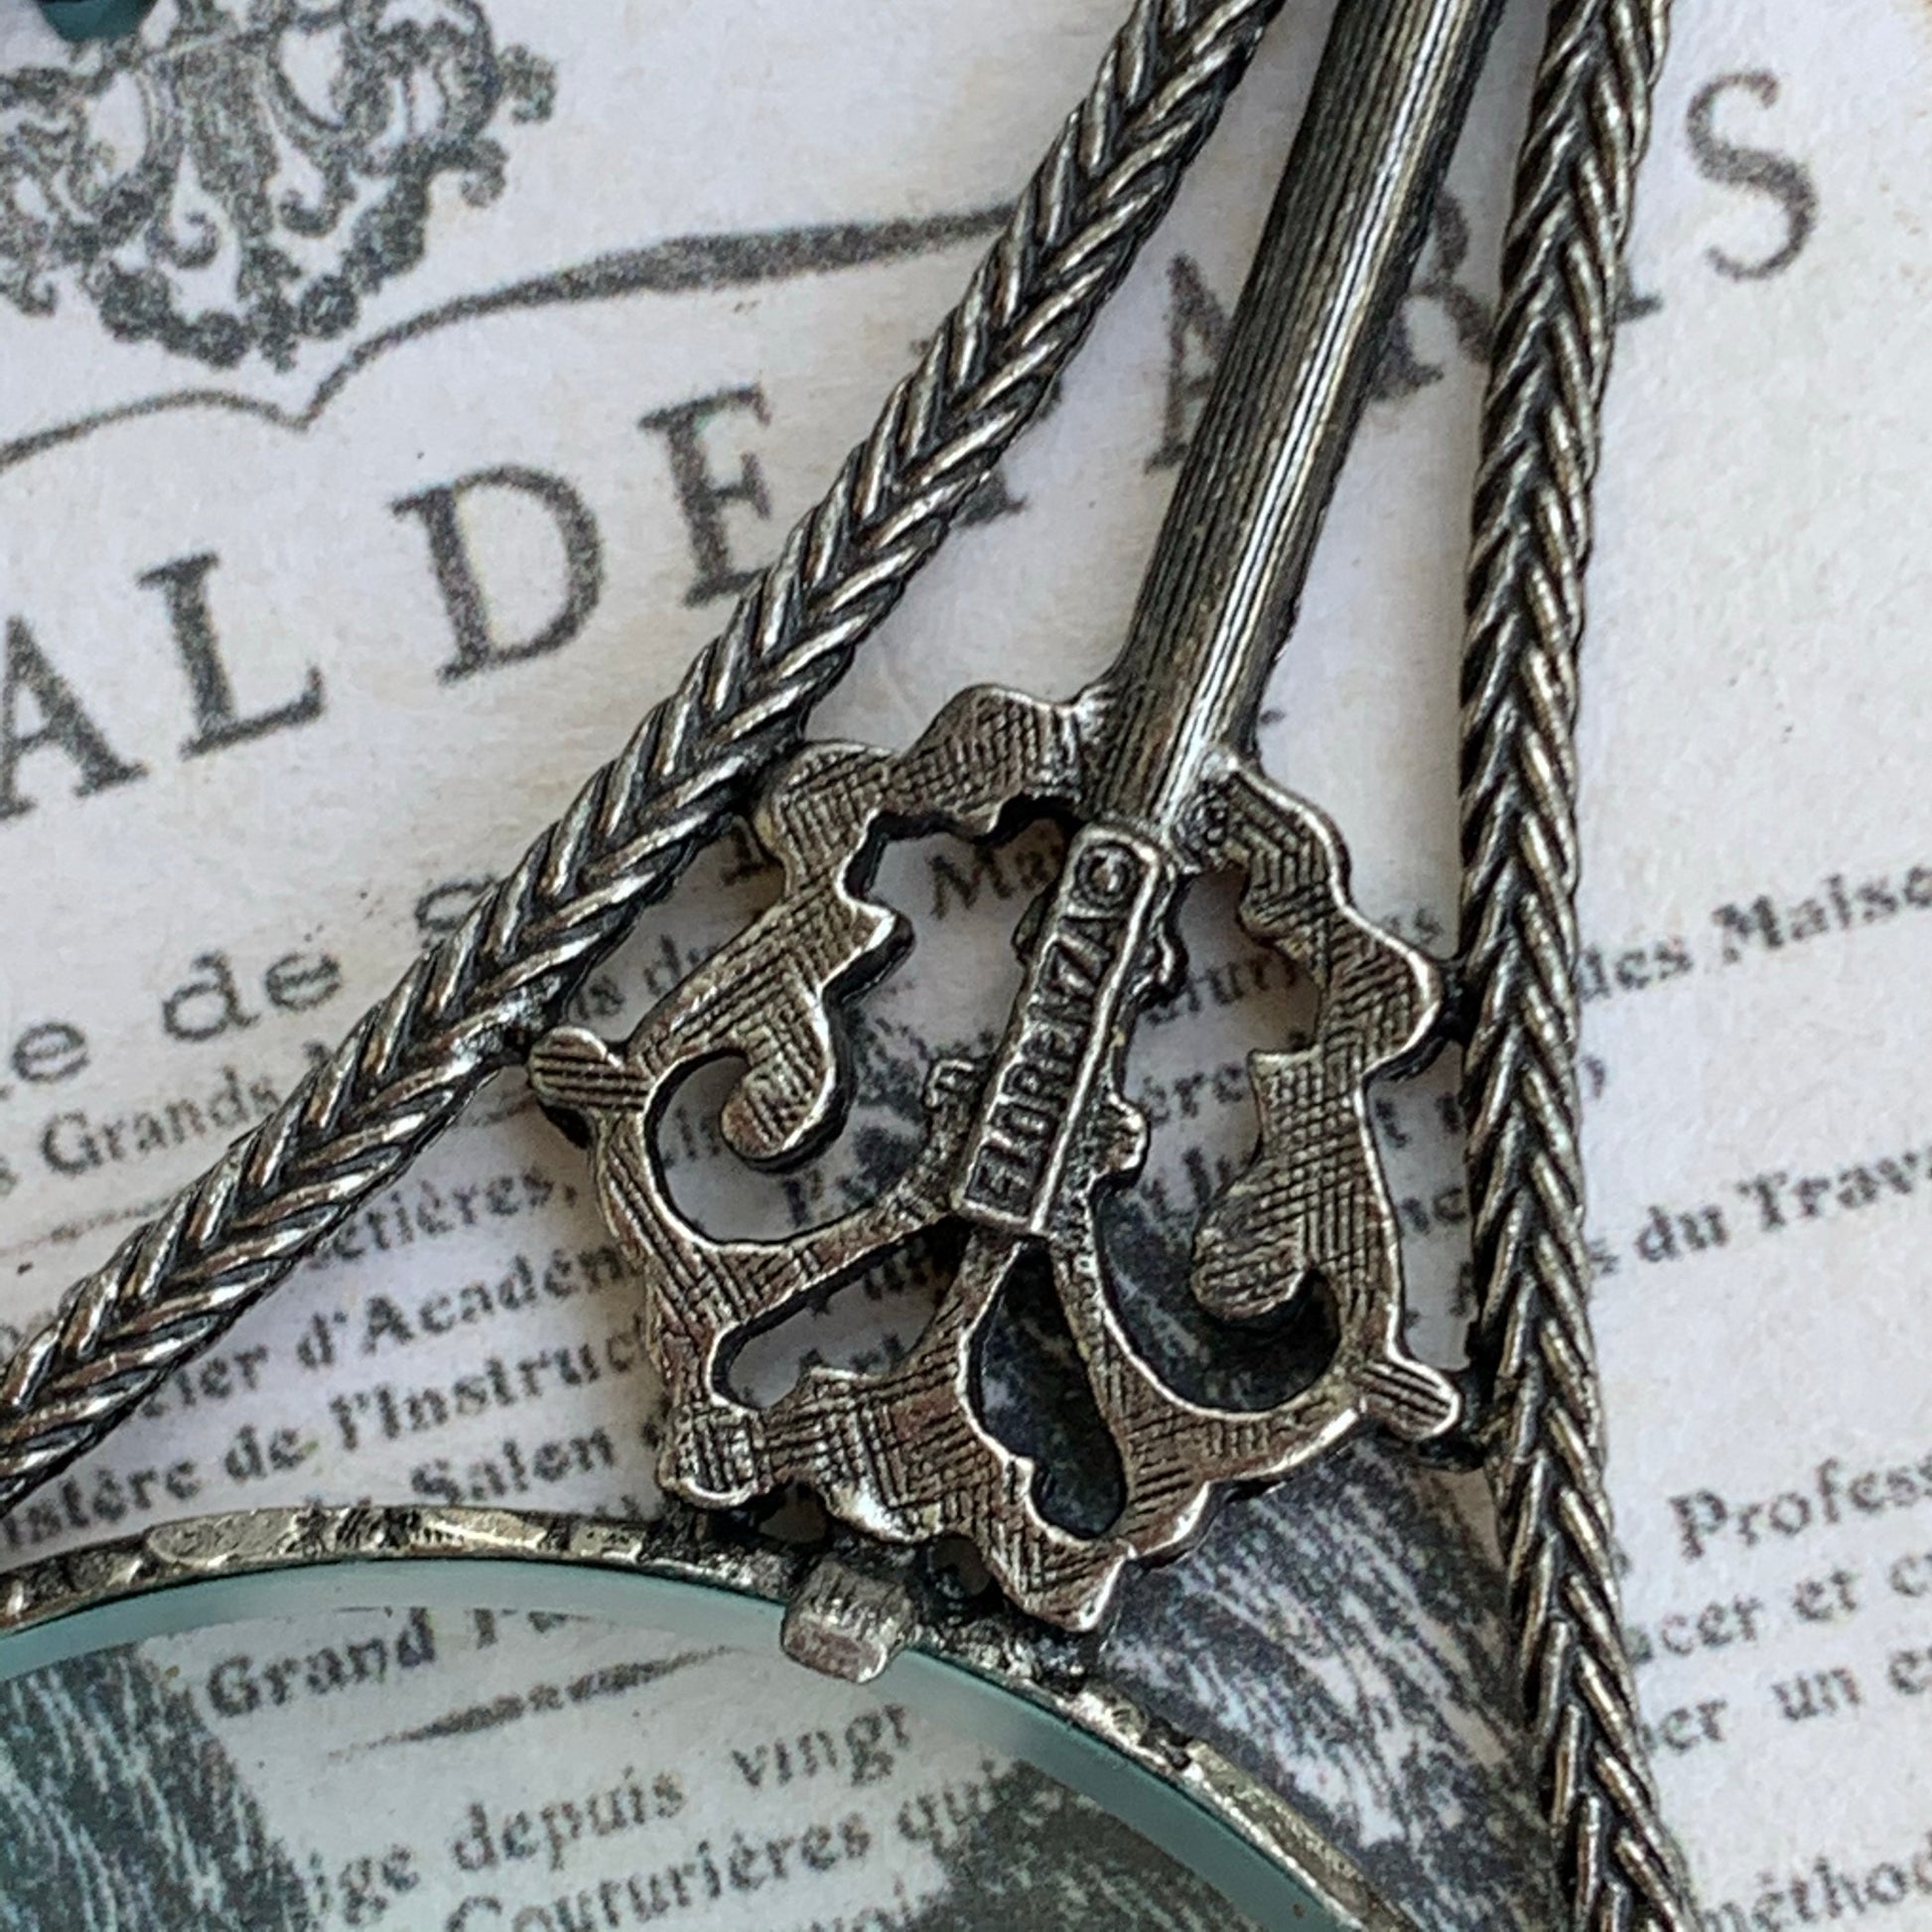 Vintage Florenza Victorian Revival Magnifying Necklace